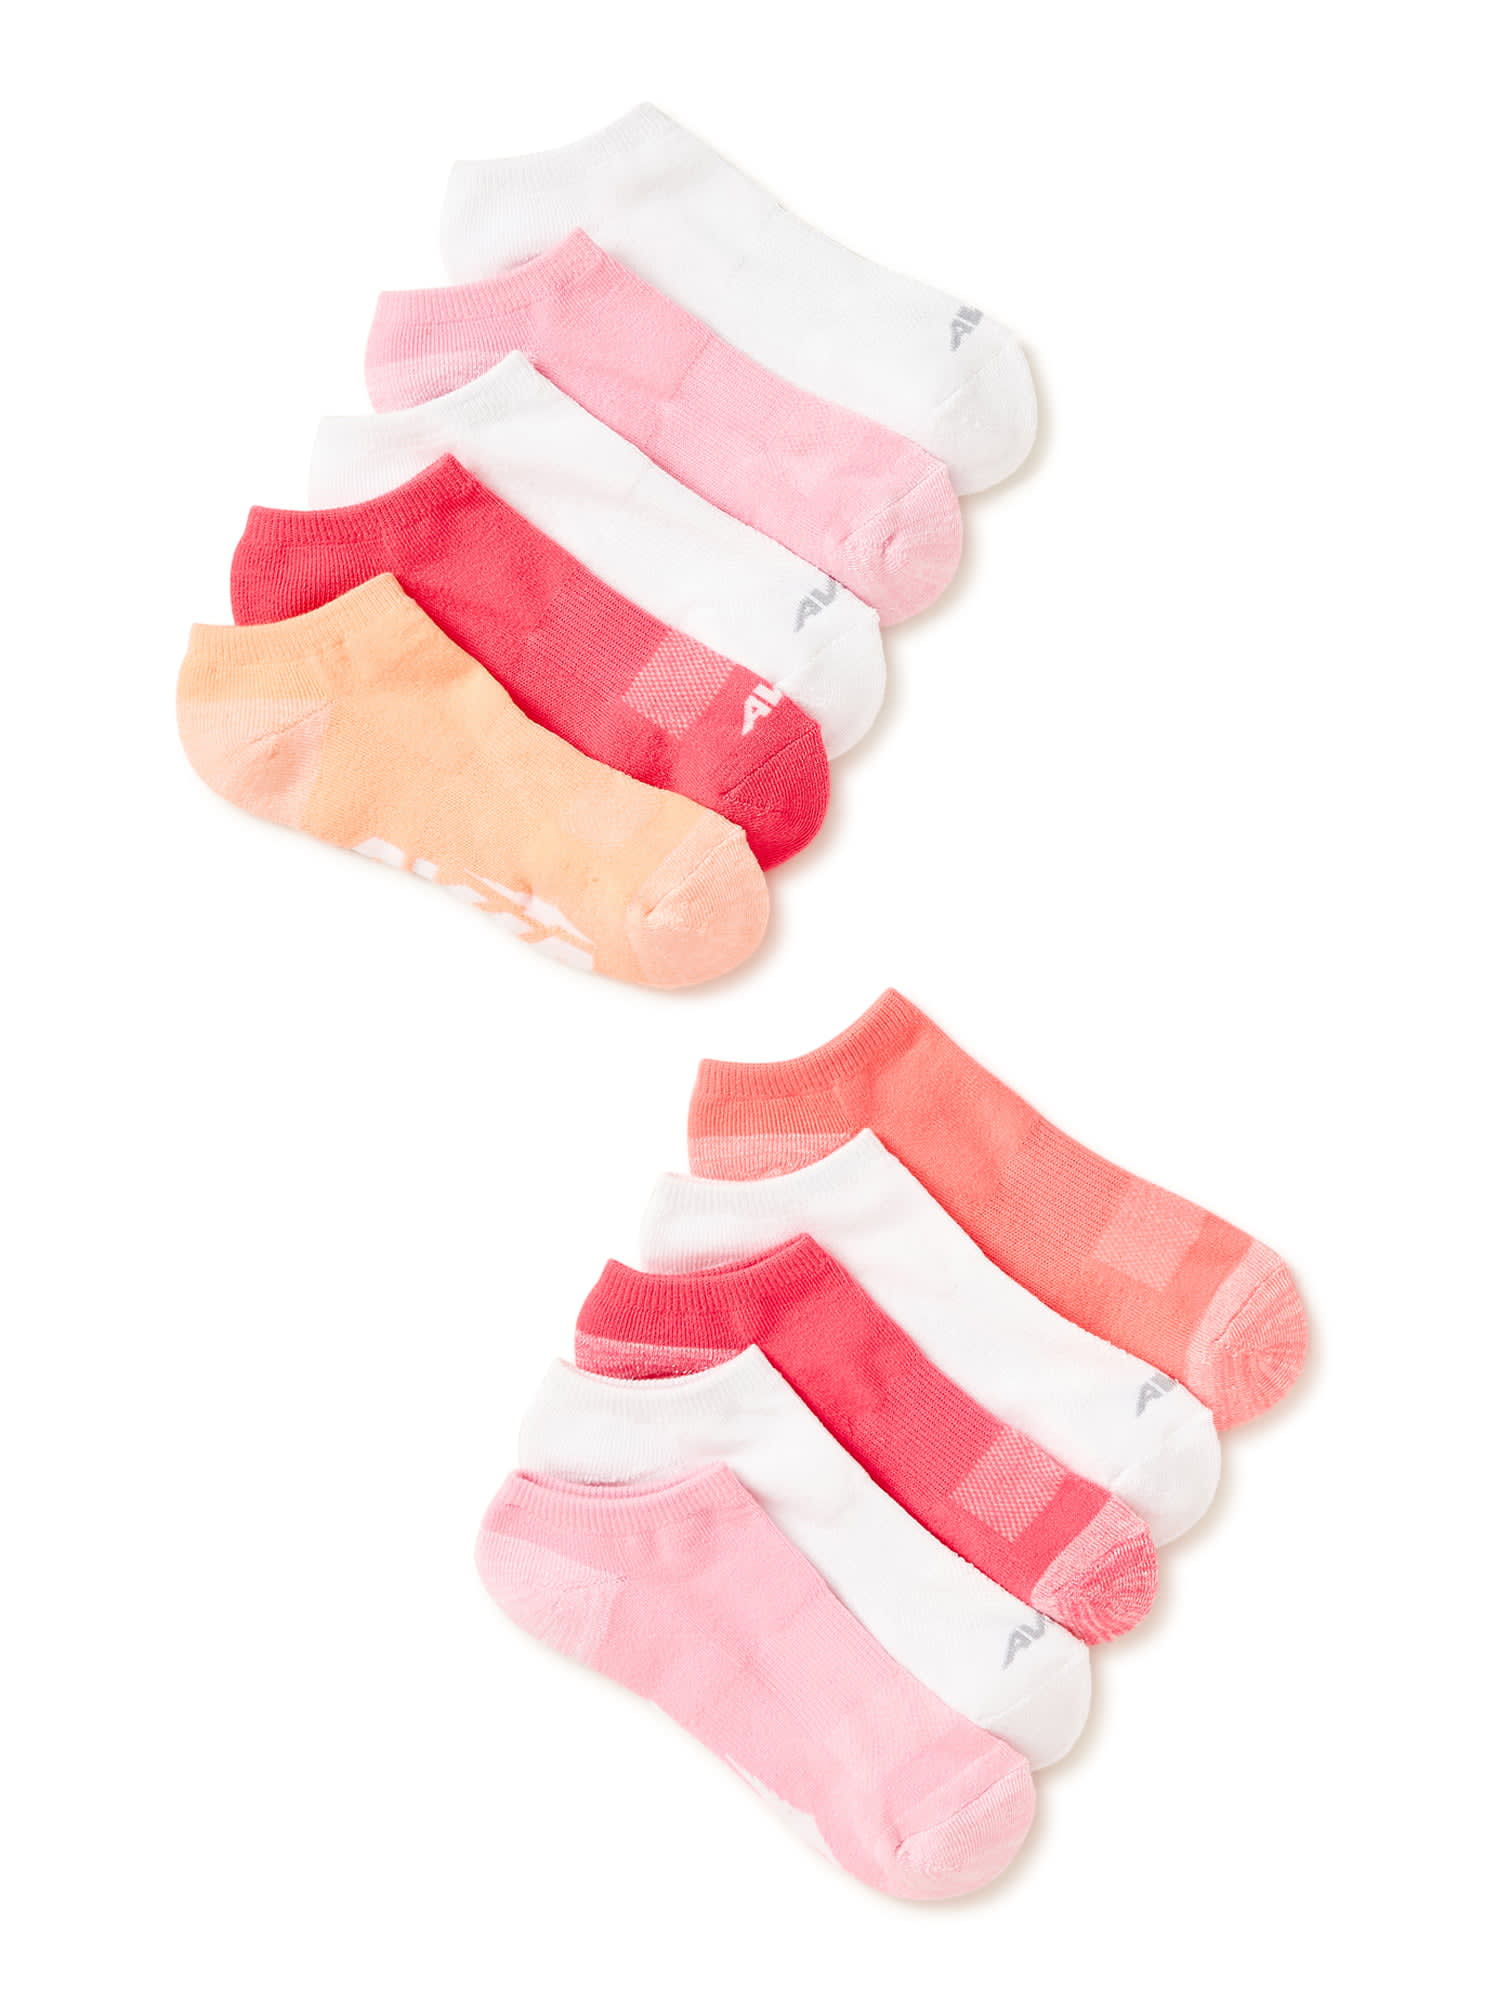 Gaiam Grippy Yoga Barre Socks, 2 Pack, Multicolor, M/L